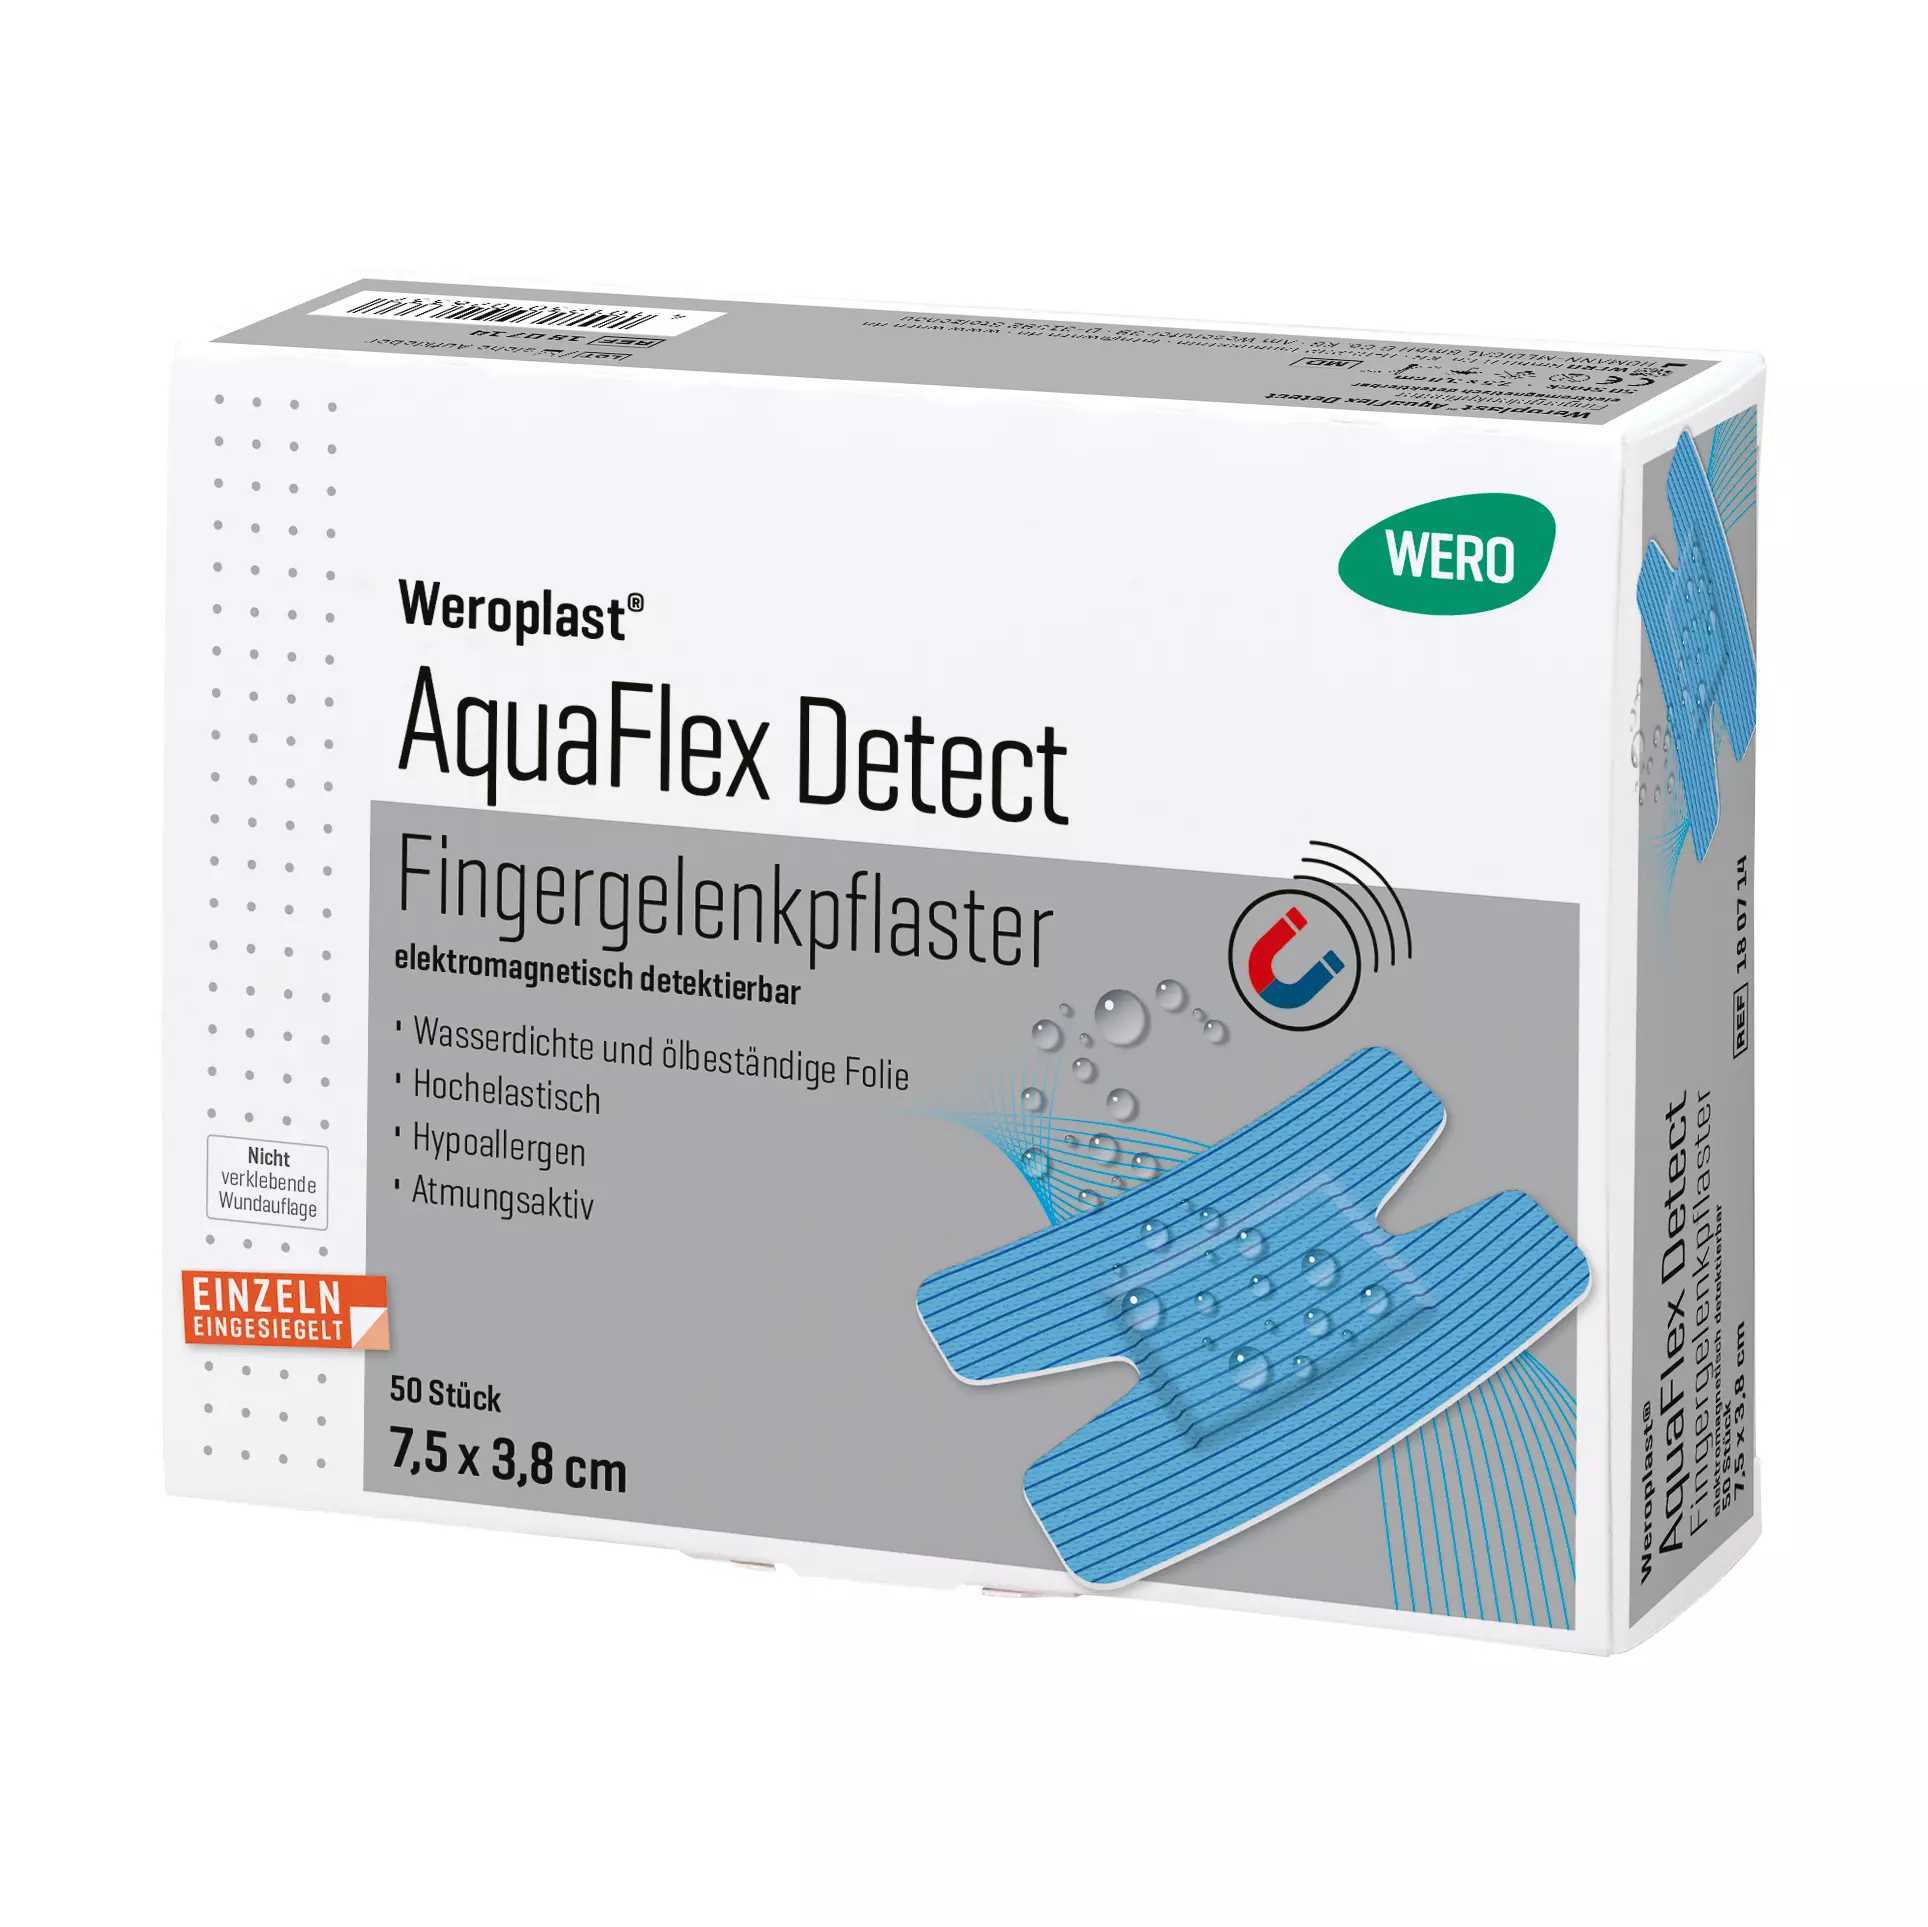 Finger joint plasters Weroplast® AquaFlex Detect